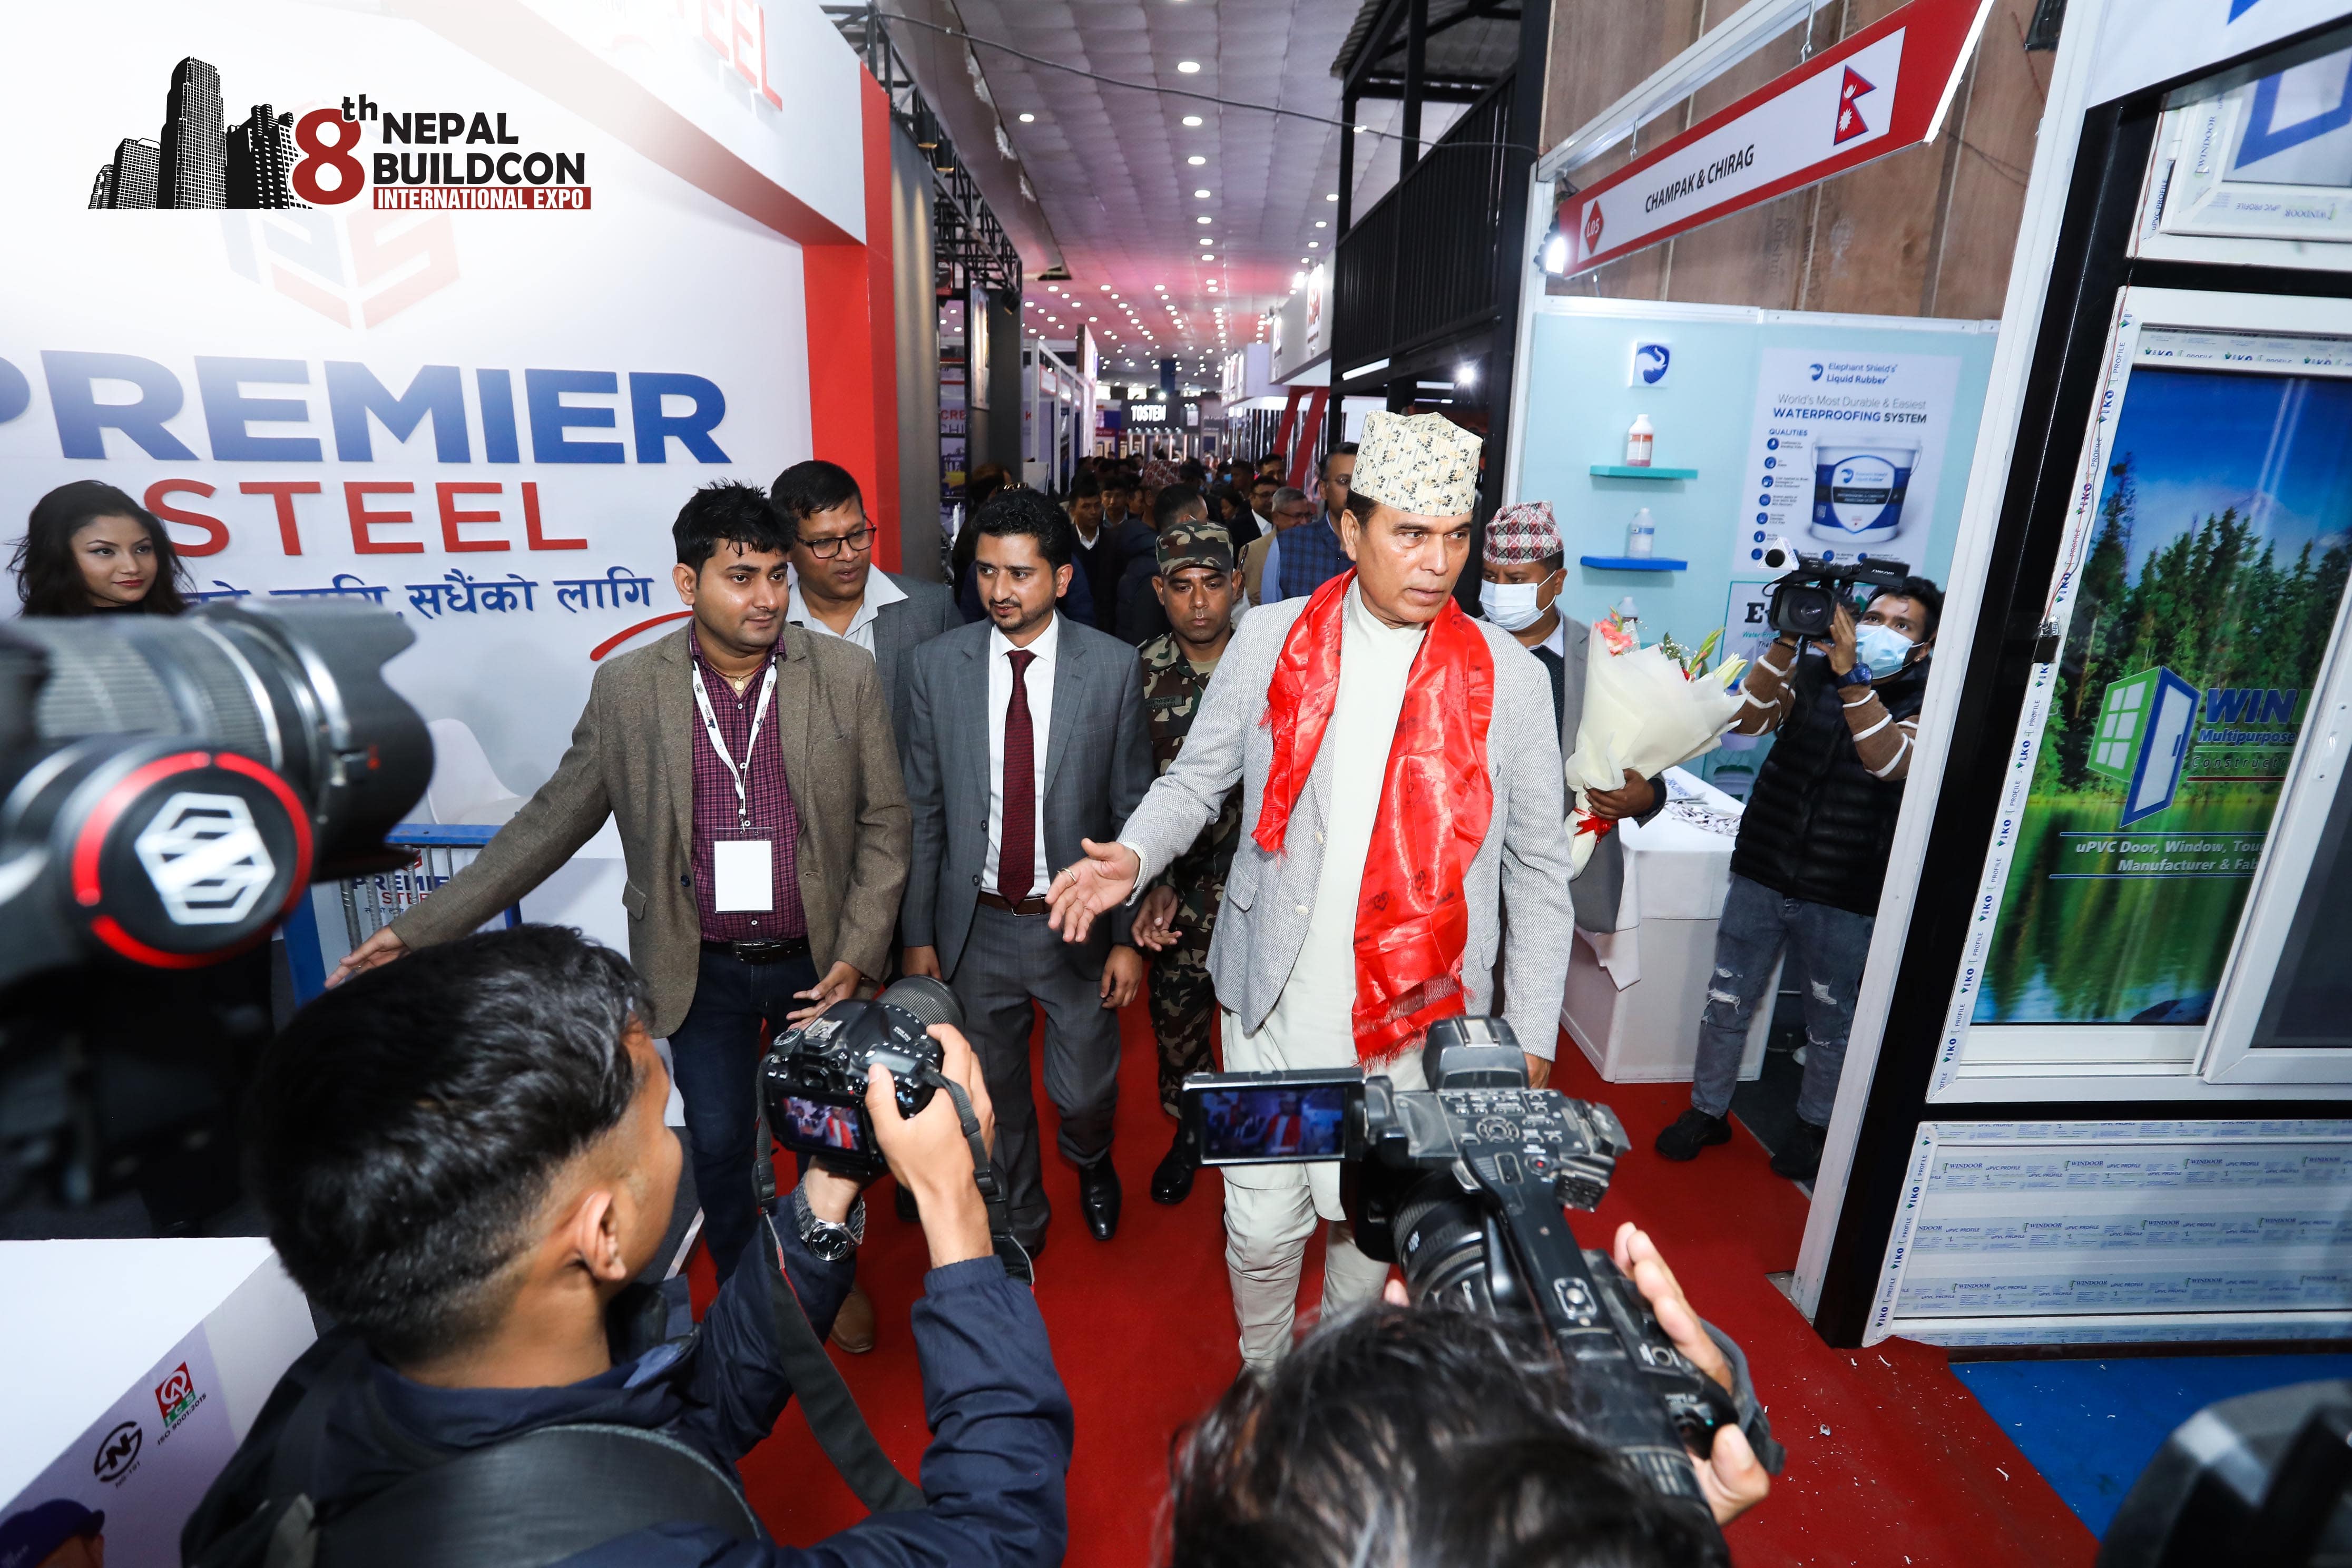 Nepal Buildcon International Expo